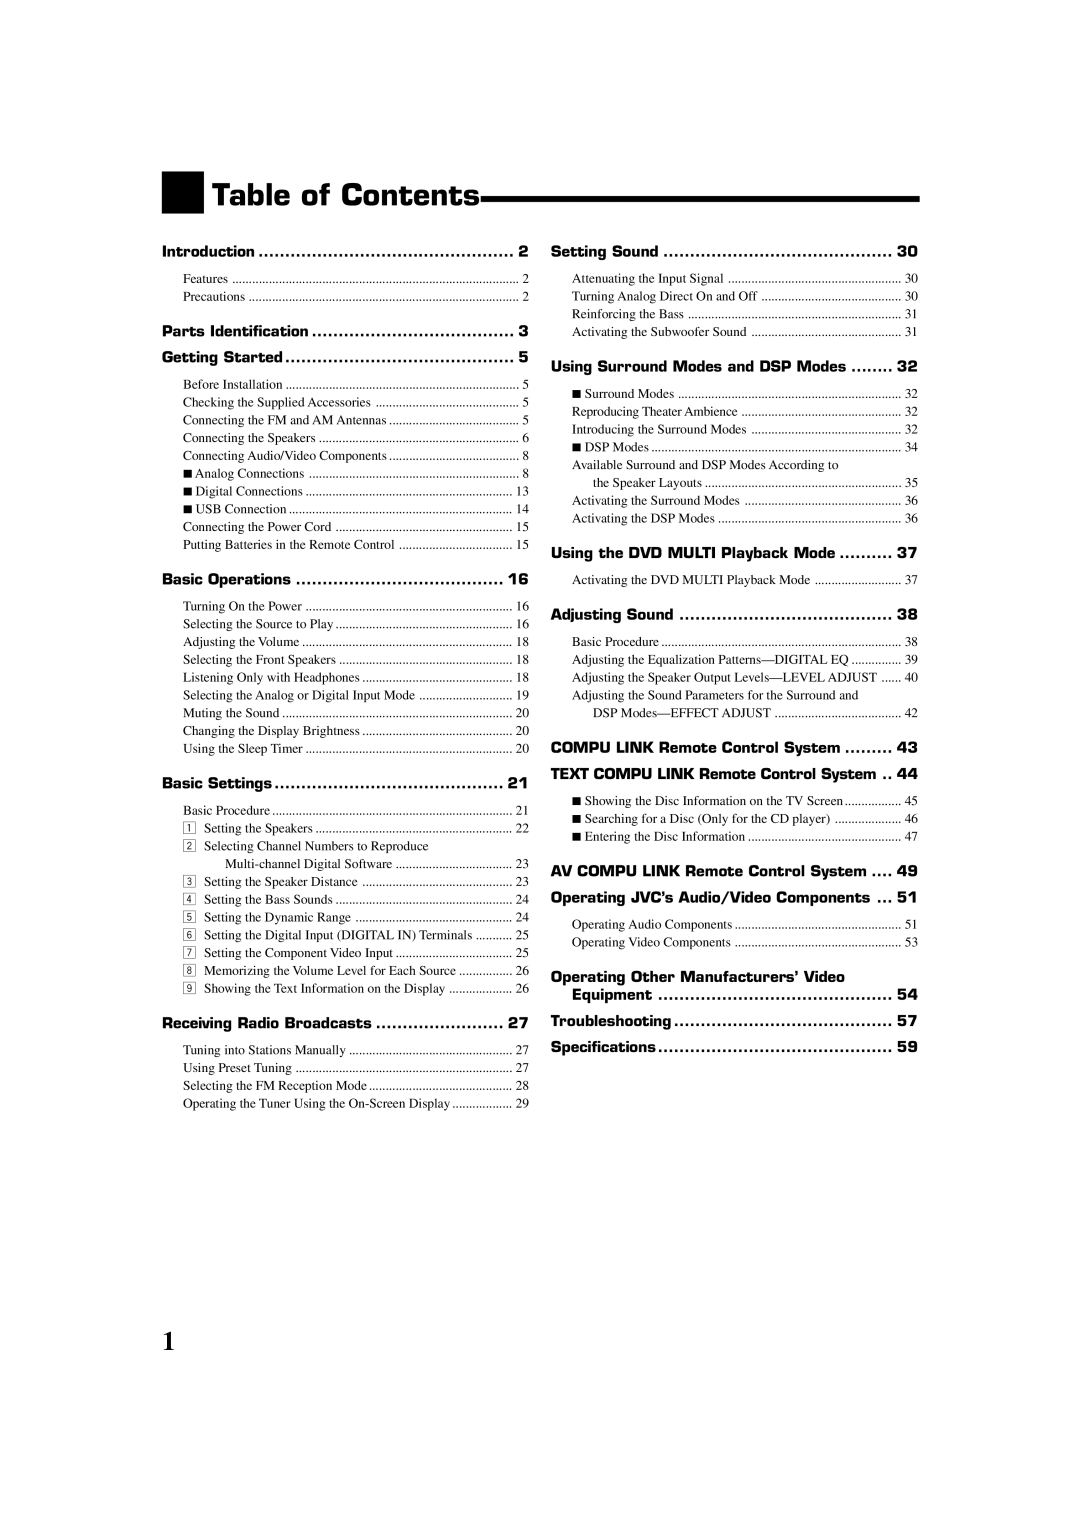 JVC RX-8020VBK manual Table of Contents 